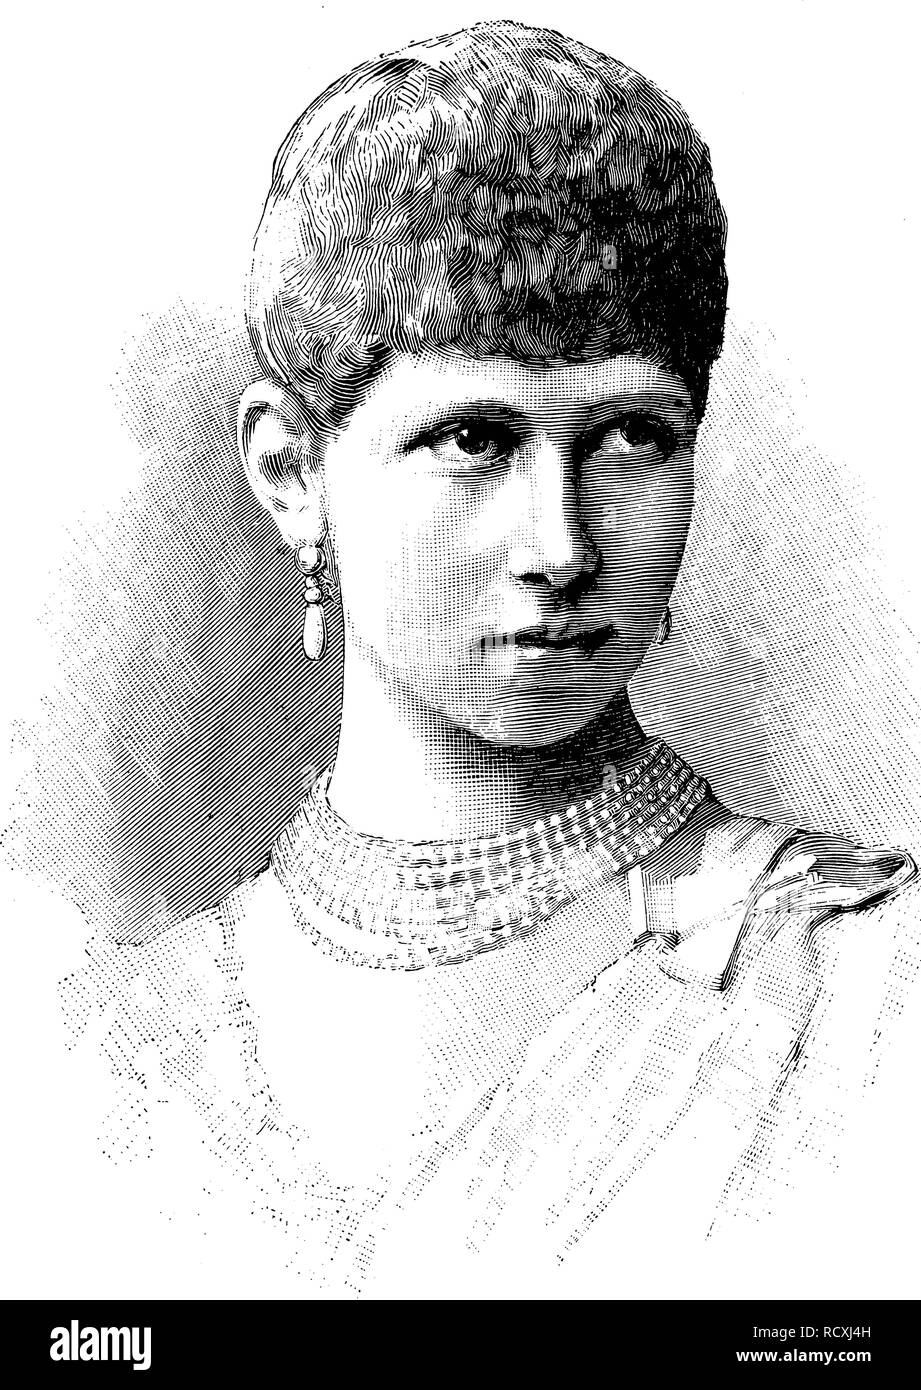 La princesse Victoria de Prusse, Amalia Wilhelmine Friederike Victoria de Prusse, 1866 - 1929, dynastie des Hohenzollern Banque D'Images